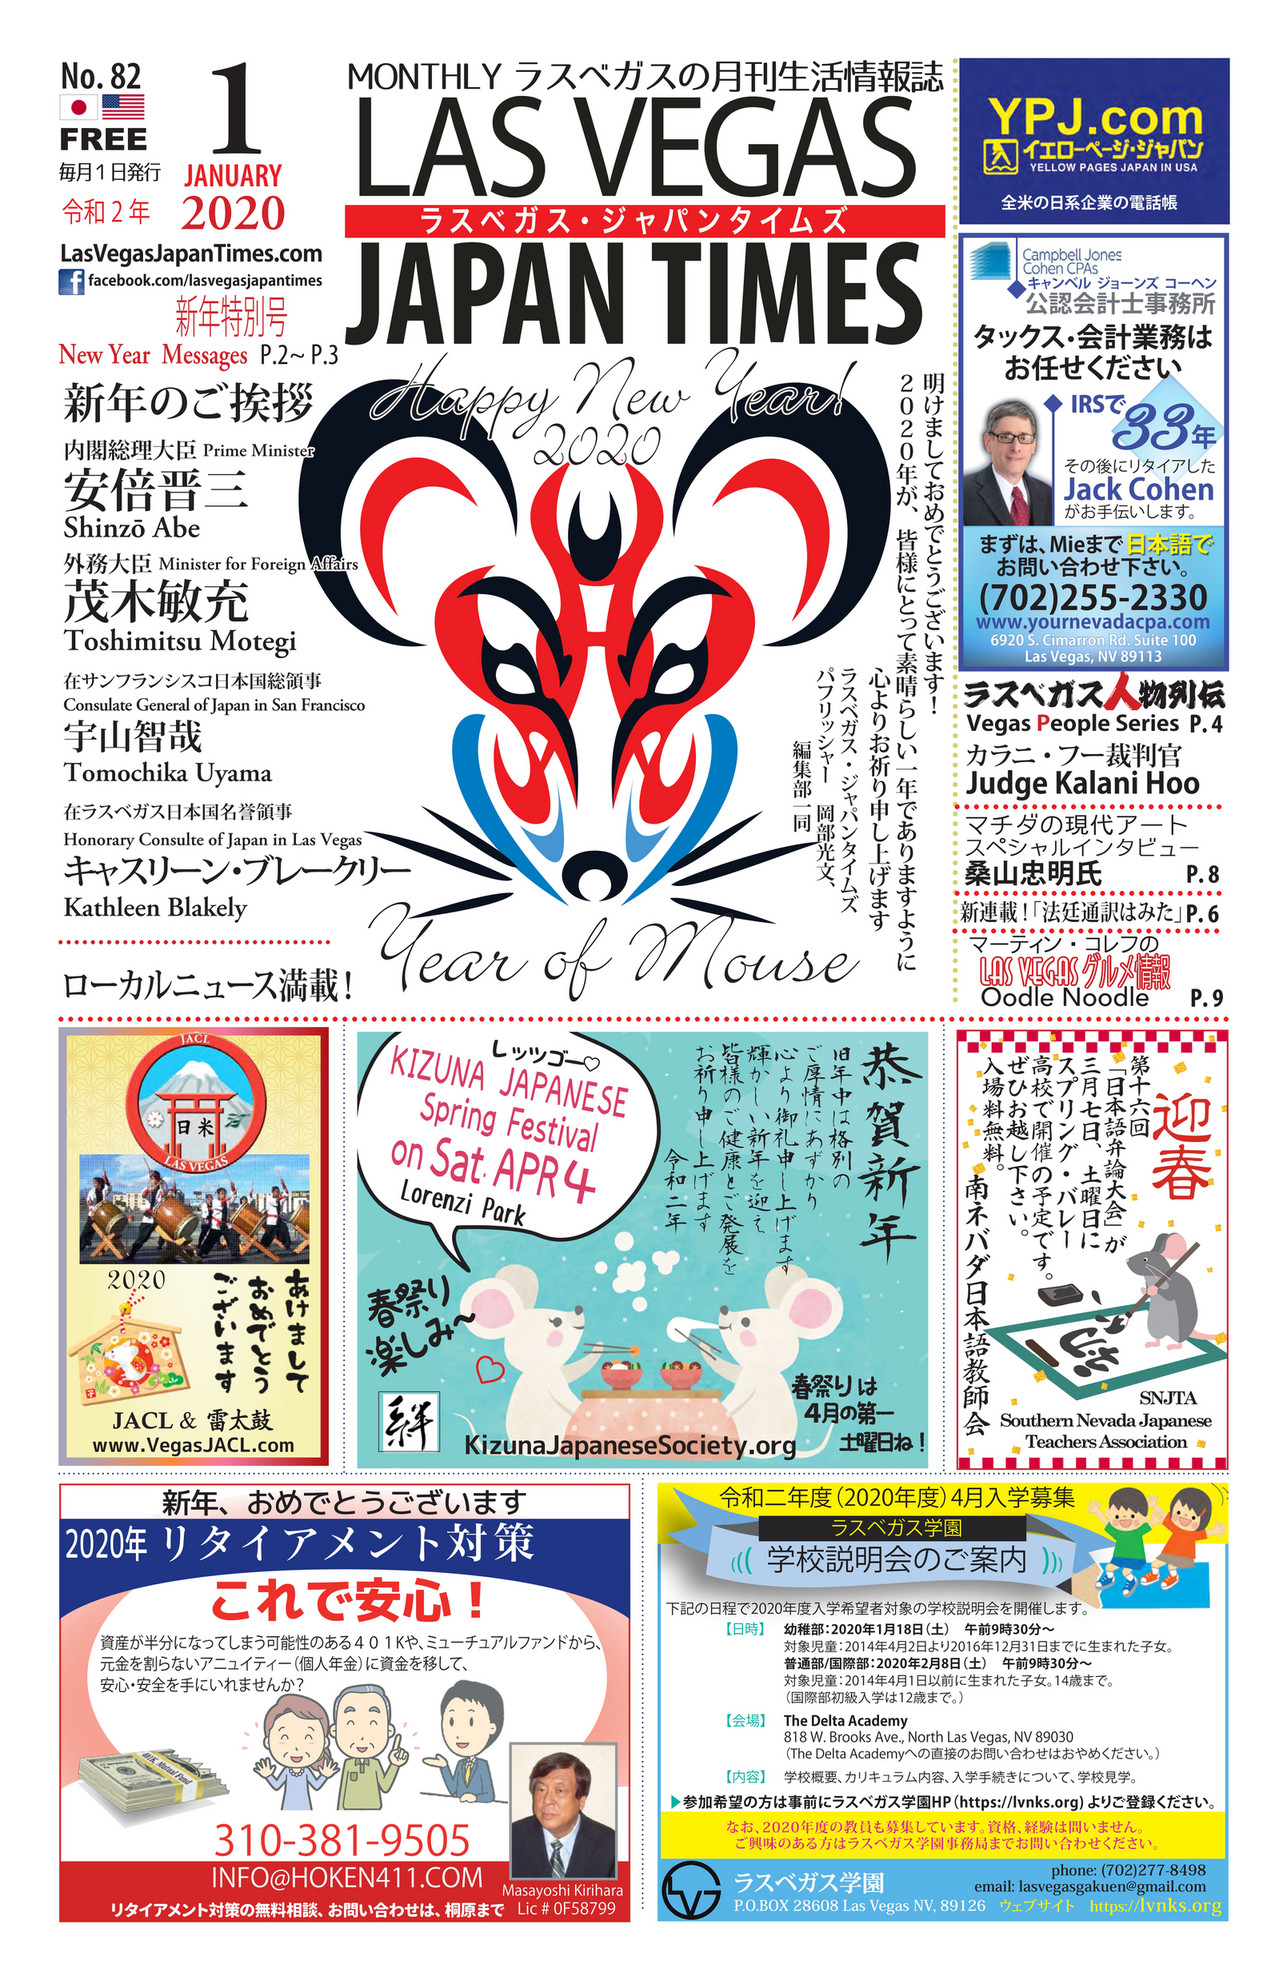 Las Vegas Japan Times ラスベガス ジャパンタイムズ ２０２０年新年特別号 ページ 1